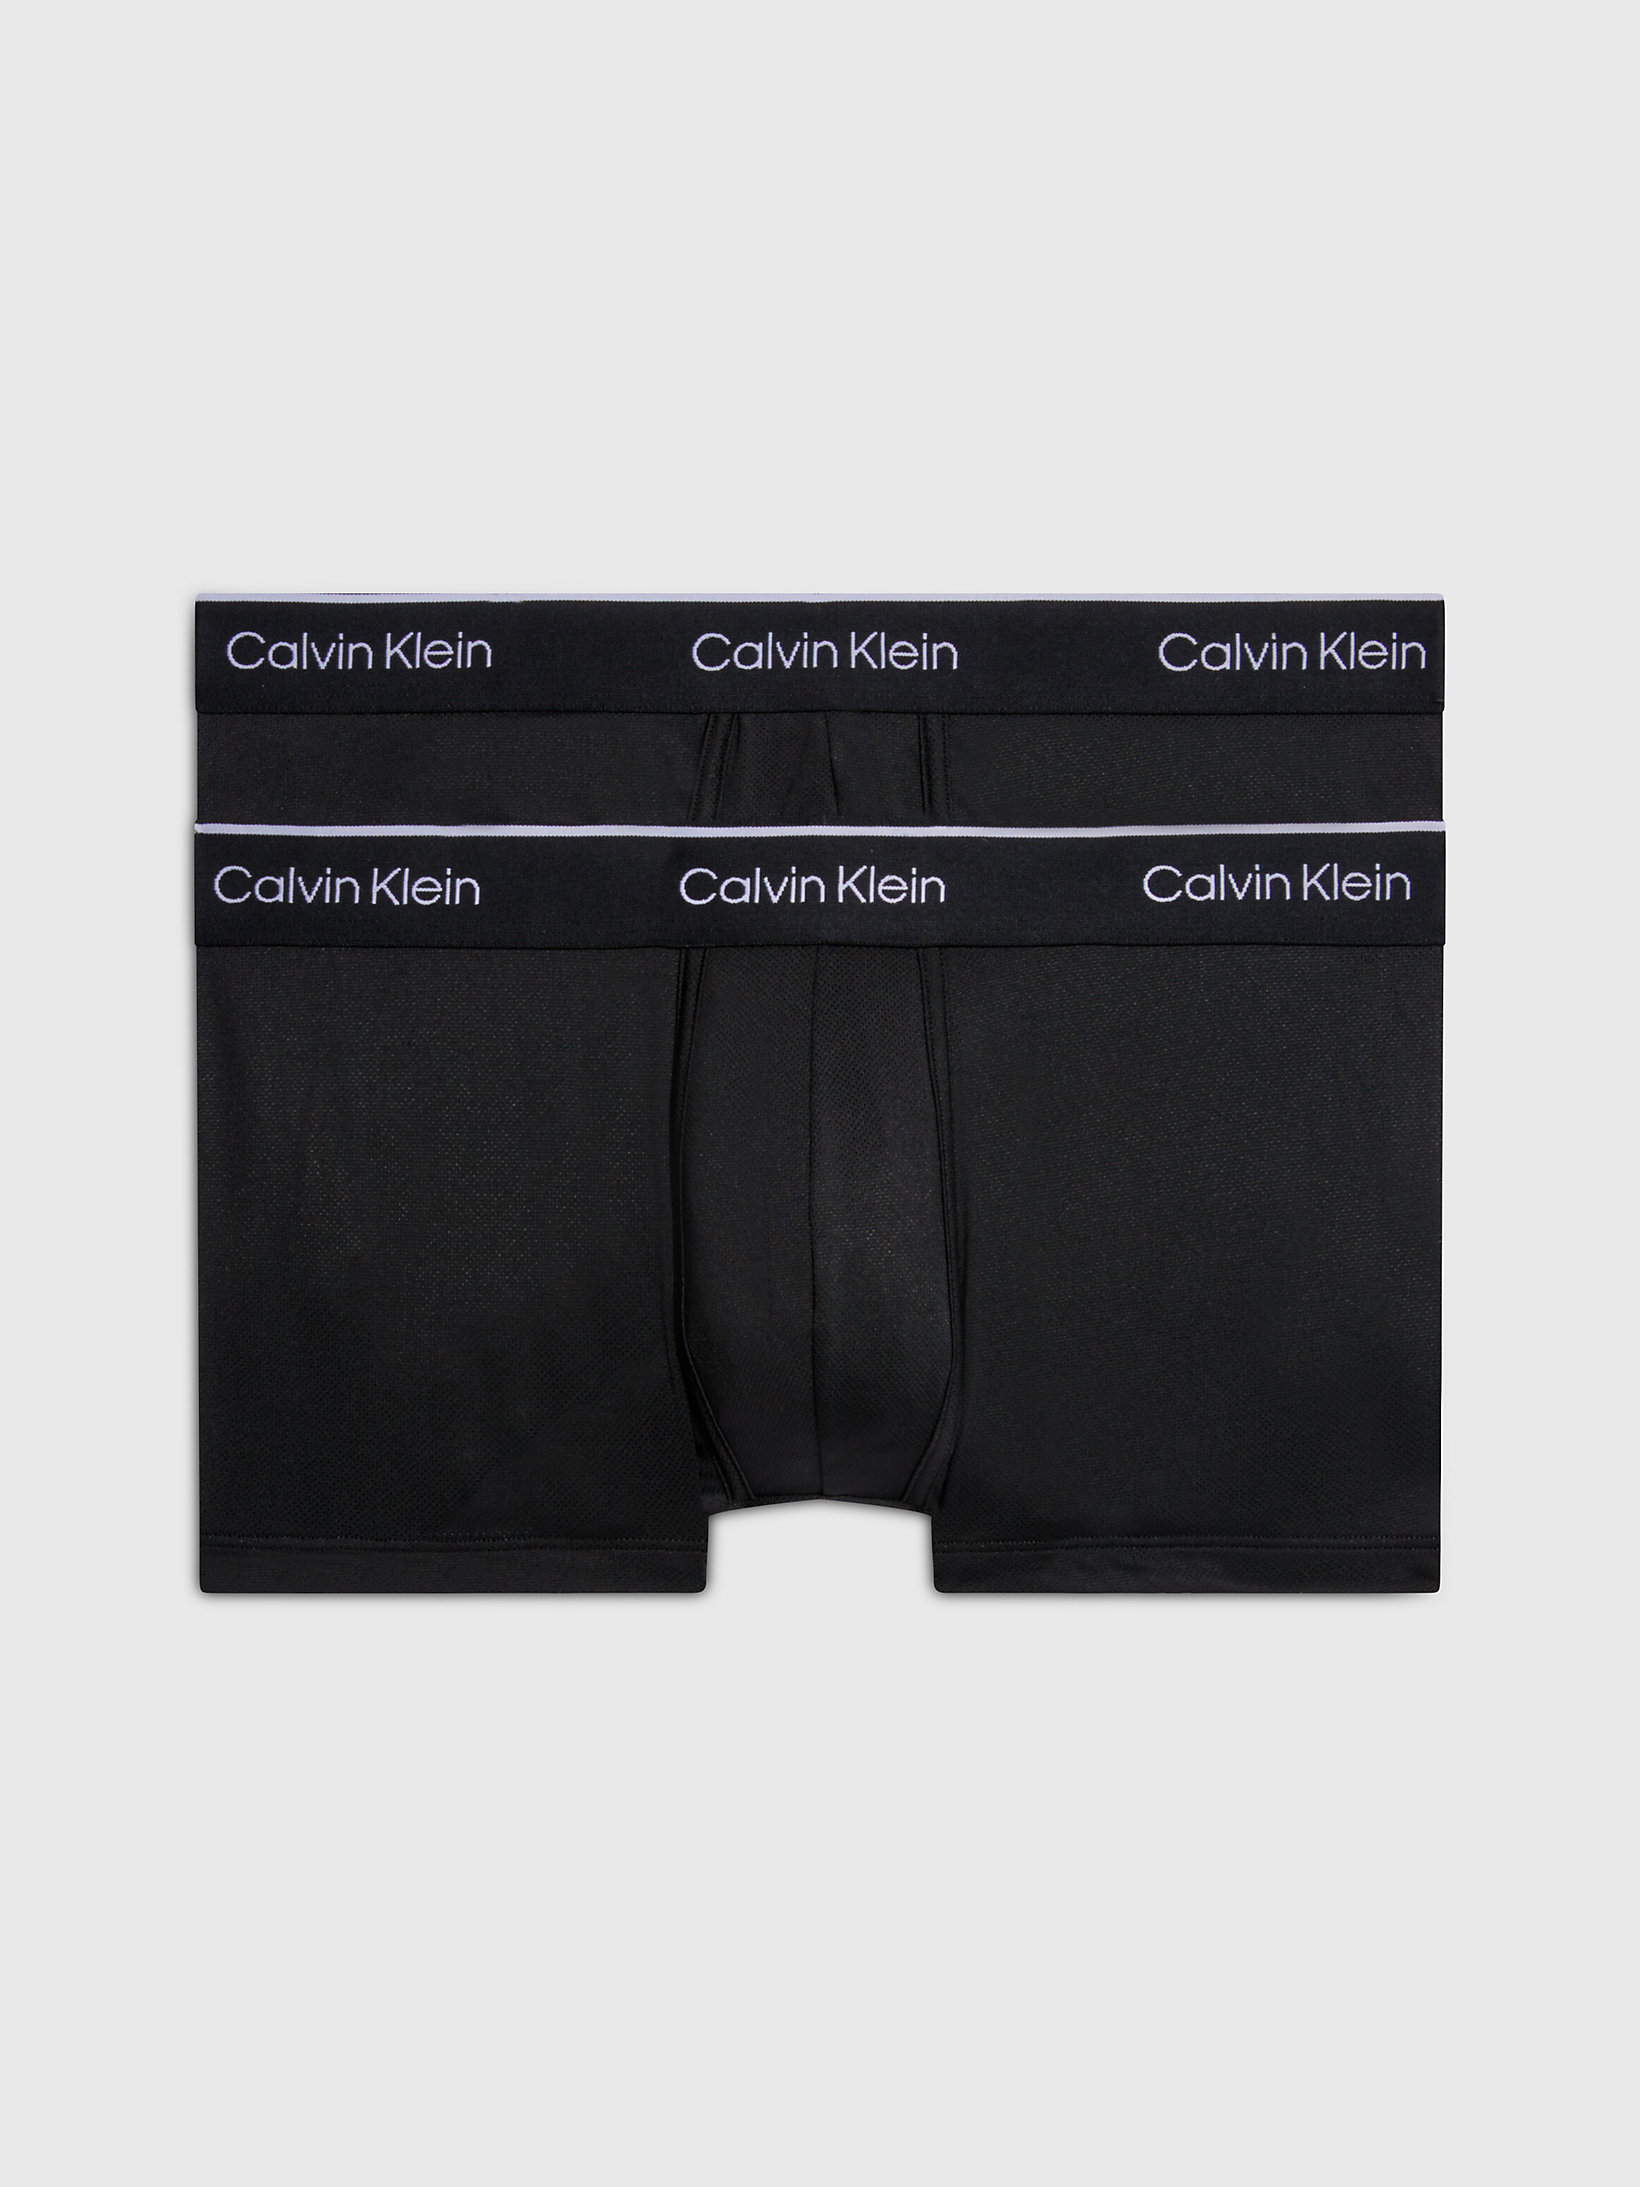 Black/black > Zestaw 2 Par Bokserek Z Niskim Stanem - CK Pro Air > undefined Mężczyźni - Calvin Klein